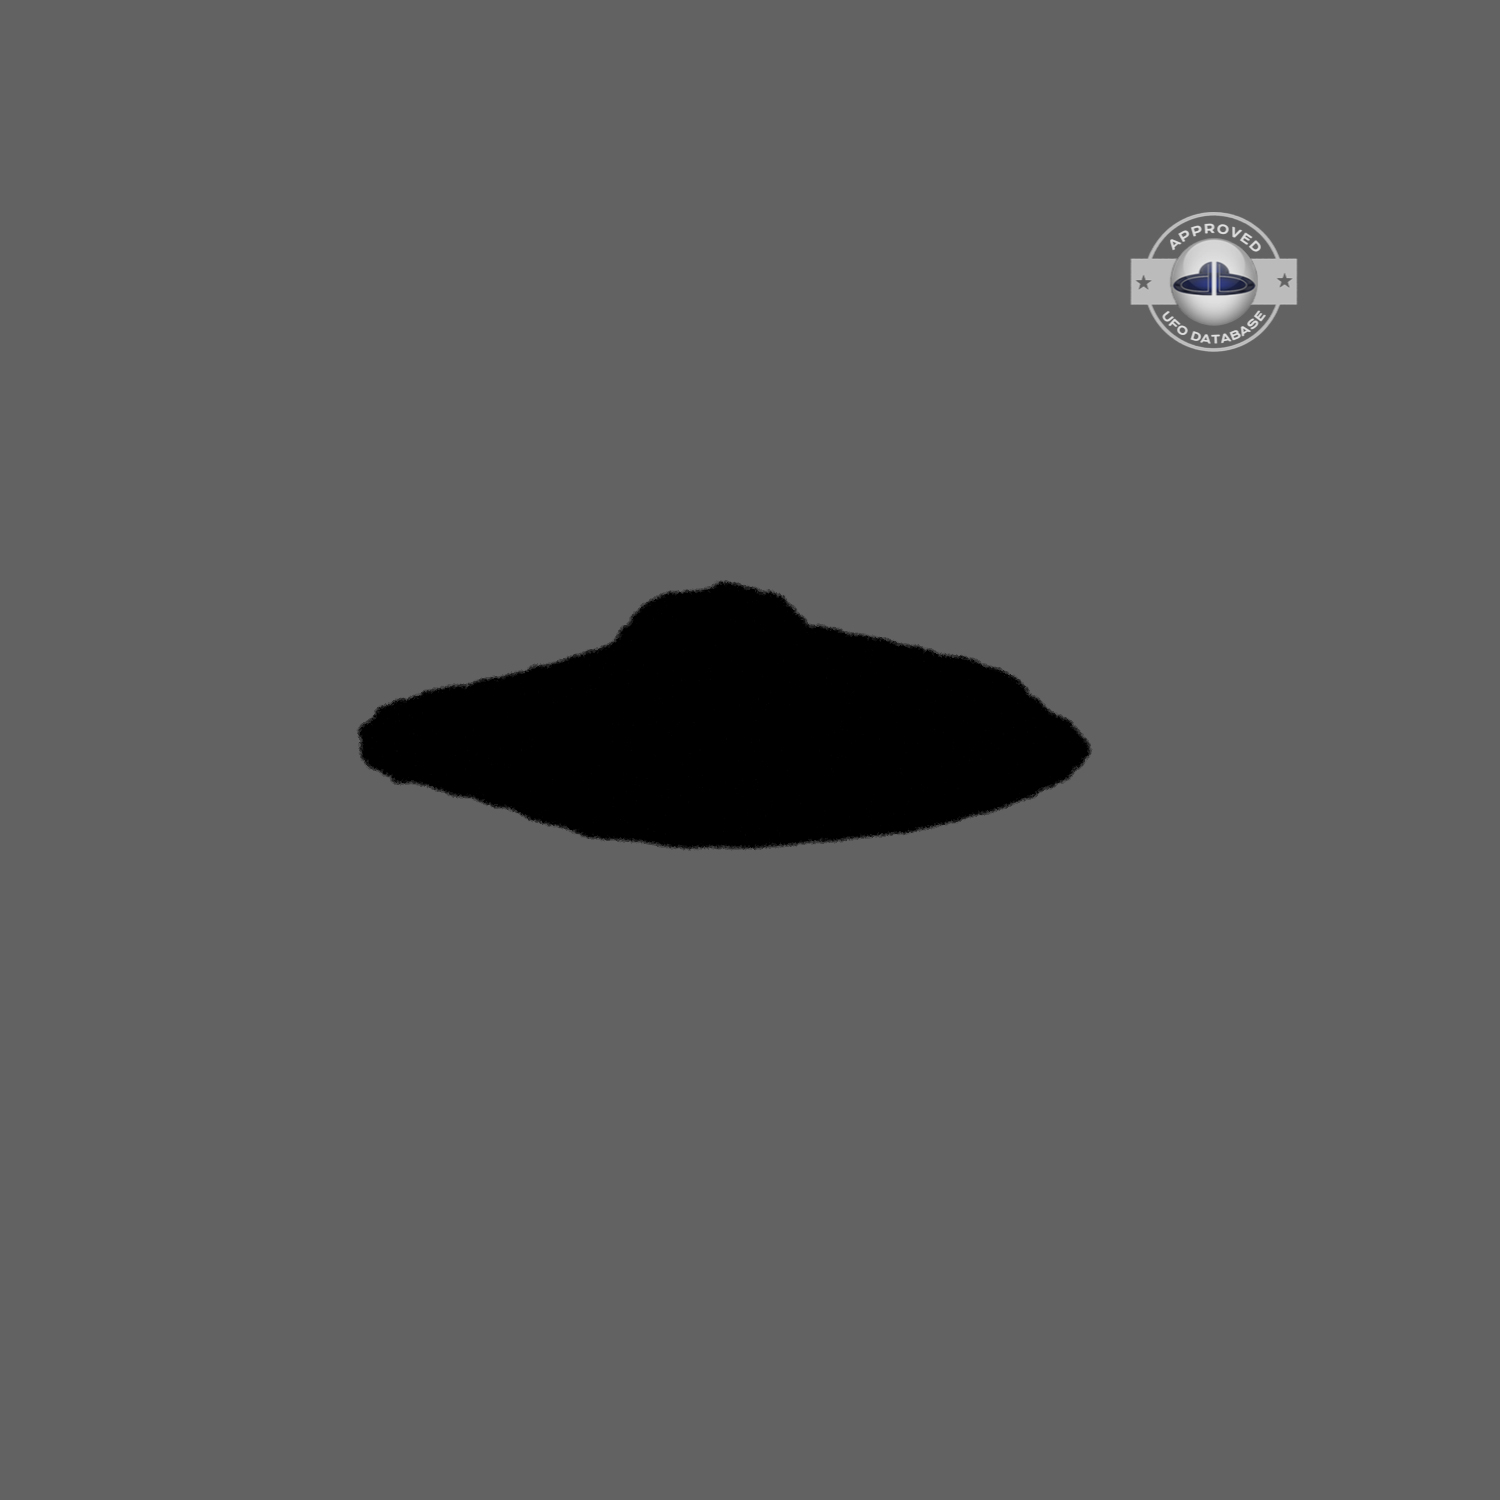 UFO over electric line in grey sky - UFO picture taken in Valcheta UFO Picture #20-5